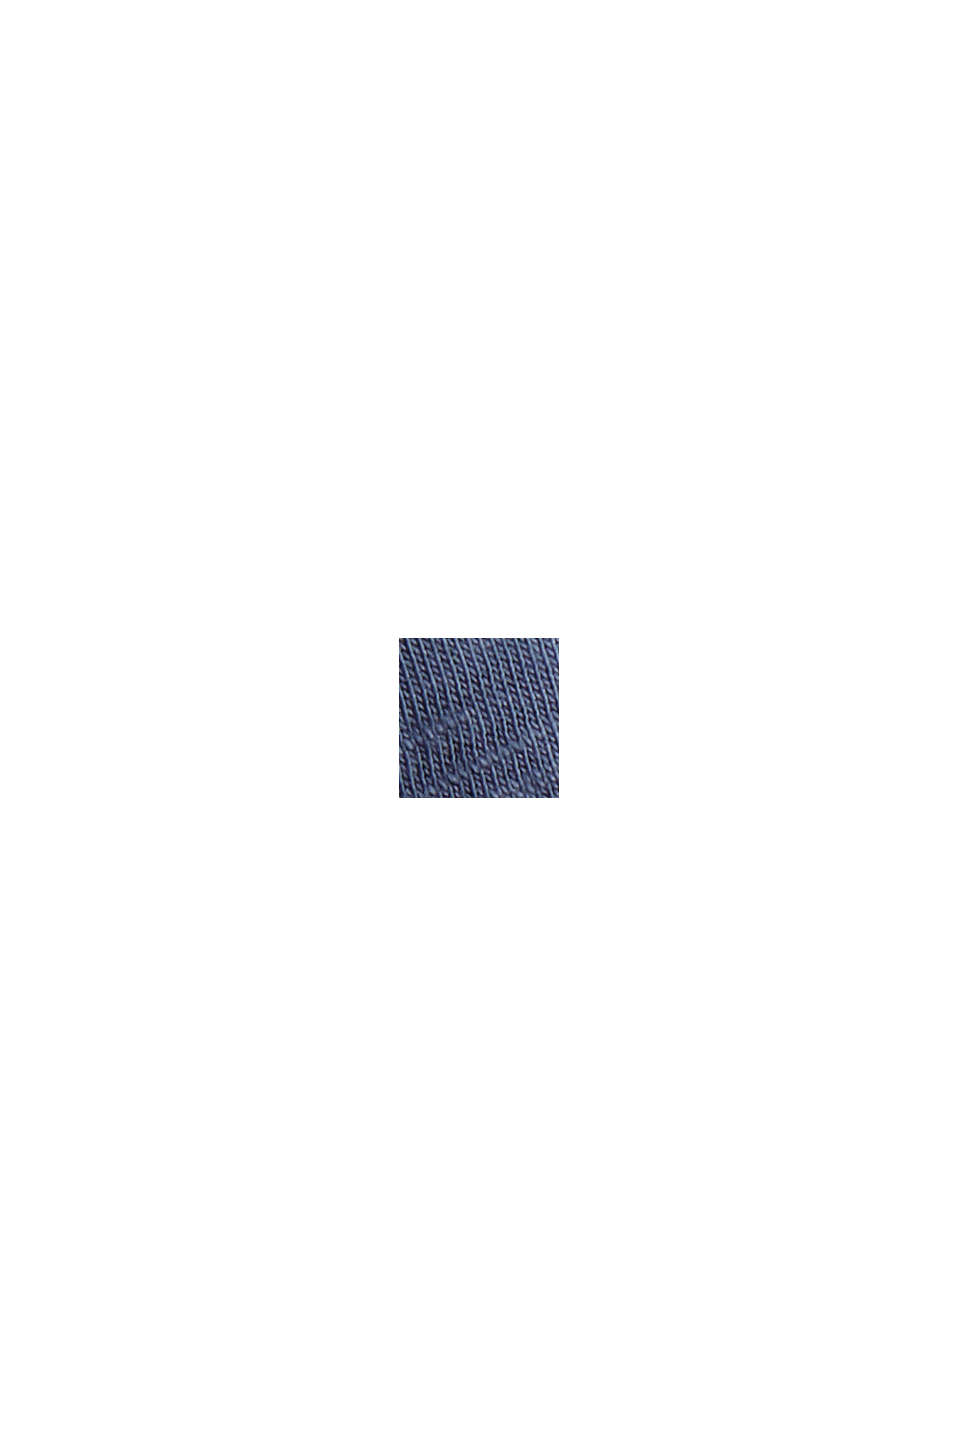 Maglia henley a maniche lunghe in 100% cotone biologico, GREY BLUE, swatch